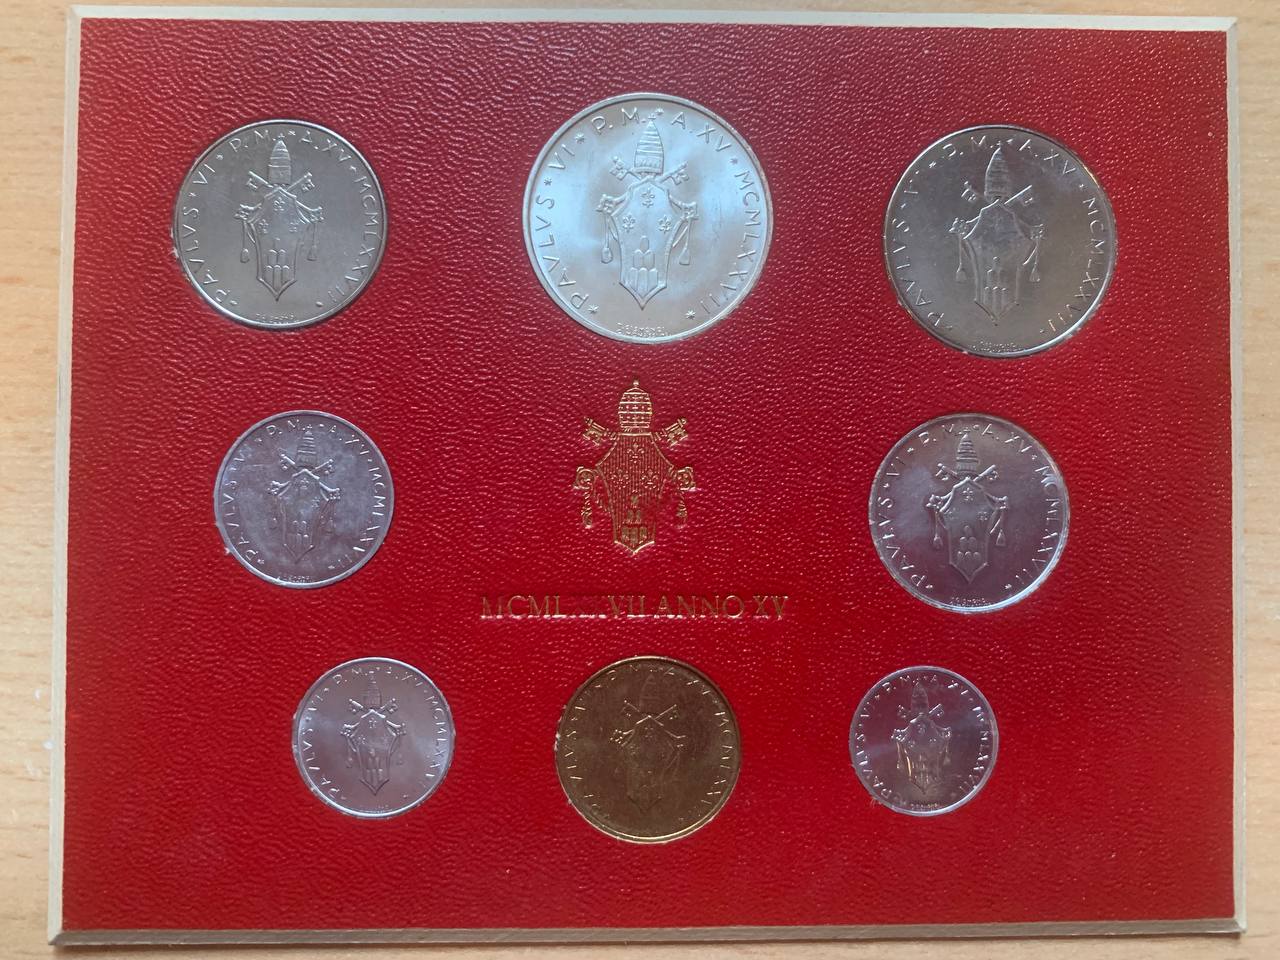  Vatikan 1977 Coin set BU (8 coins)   